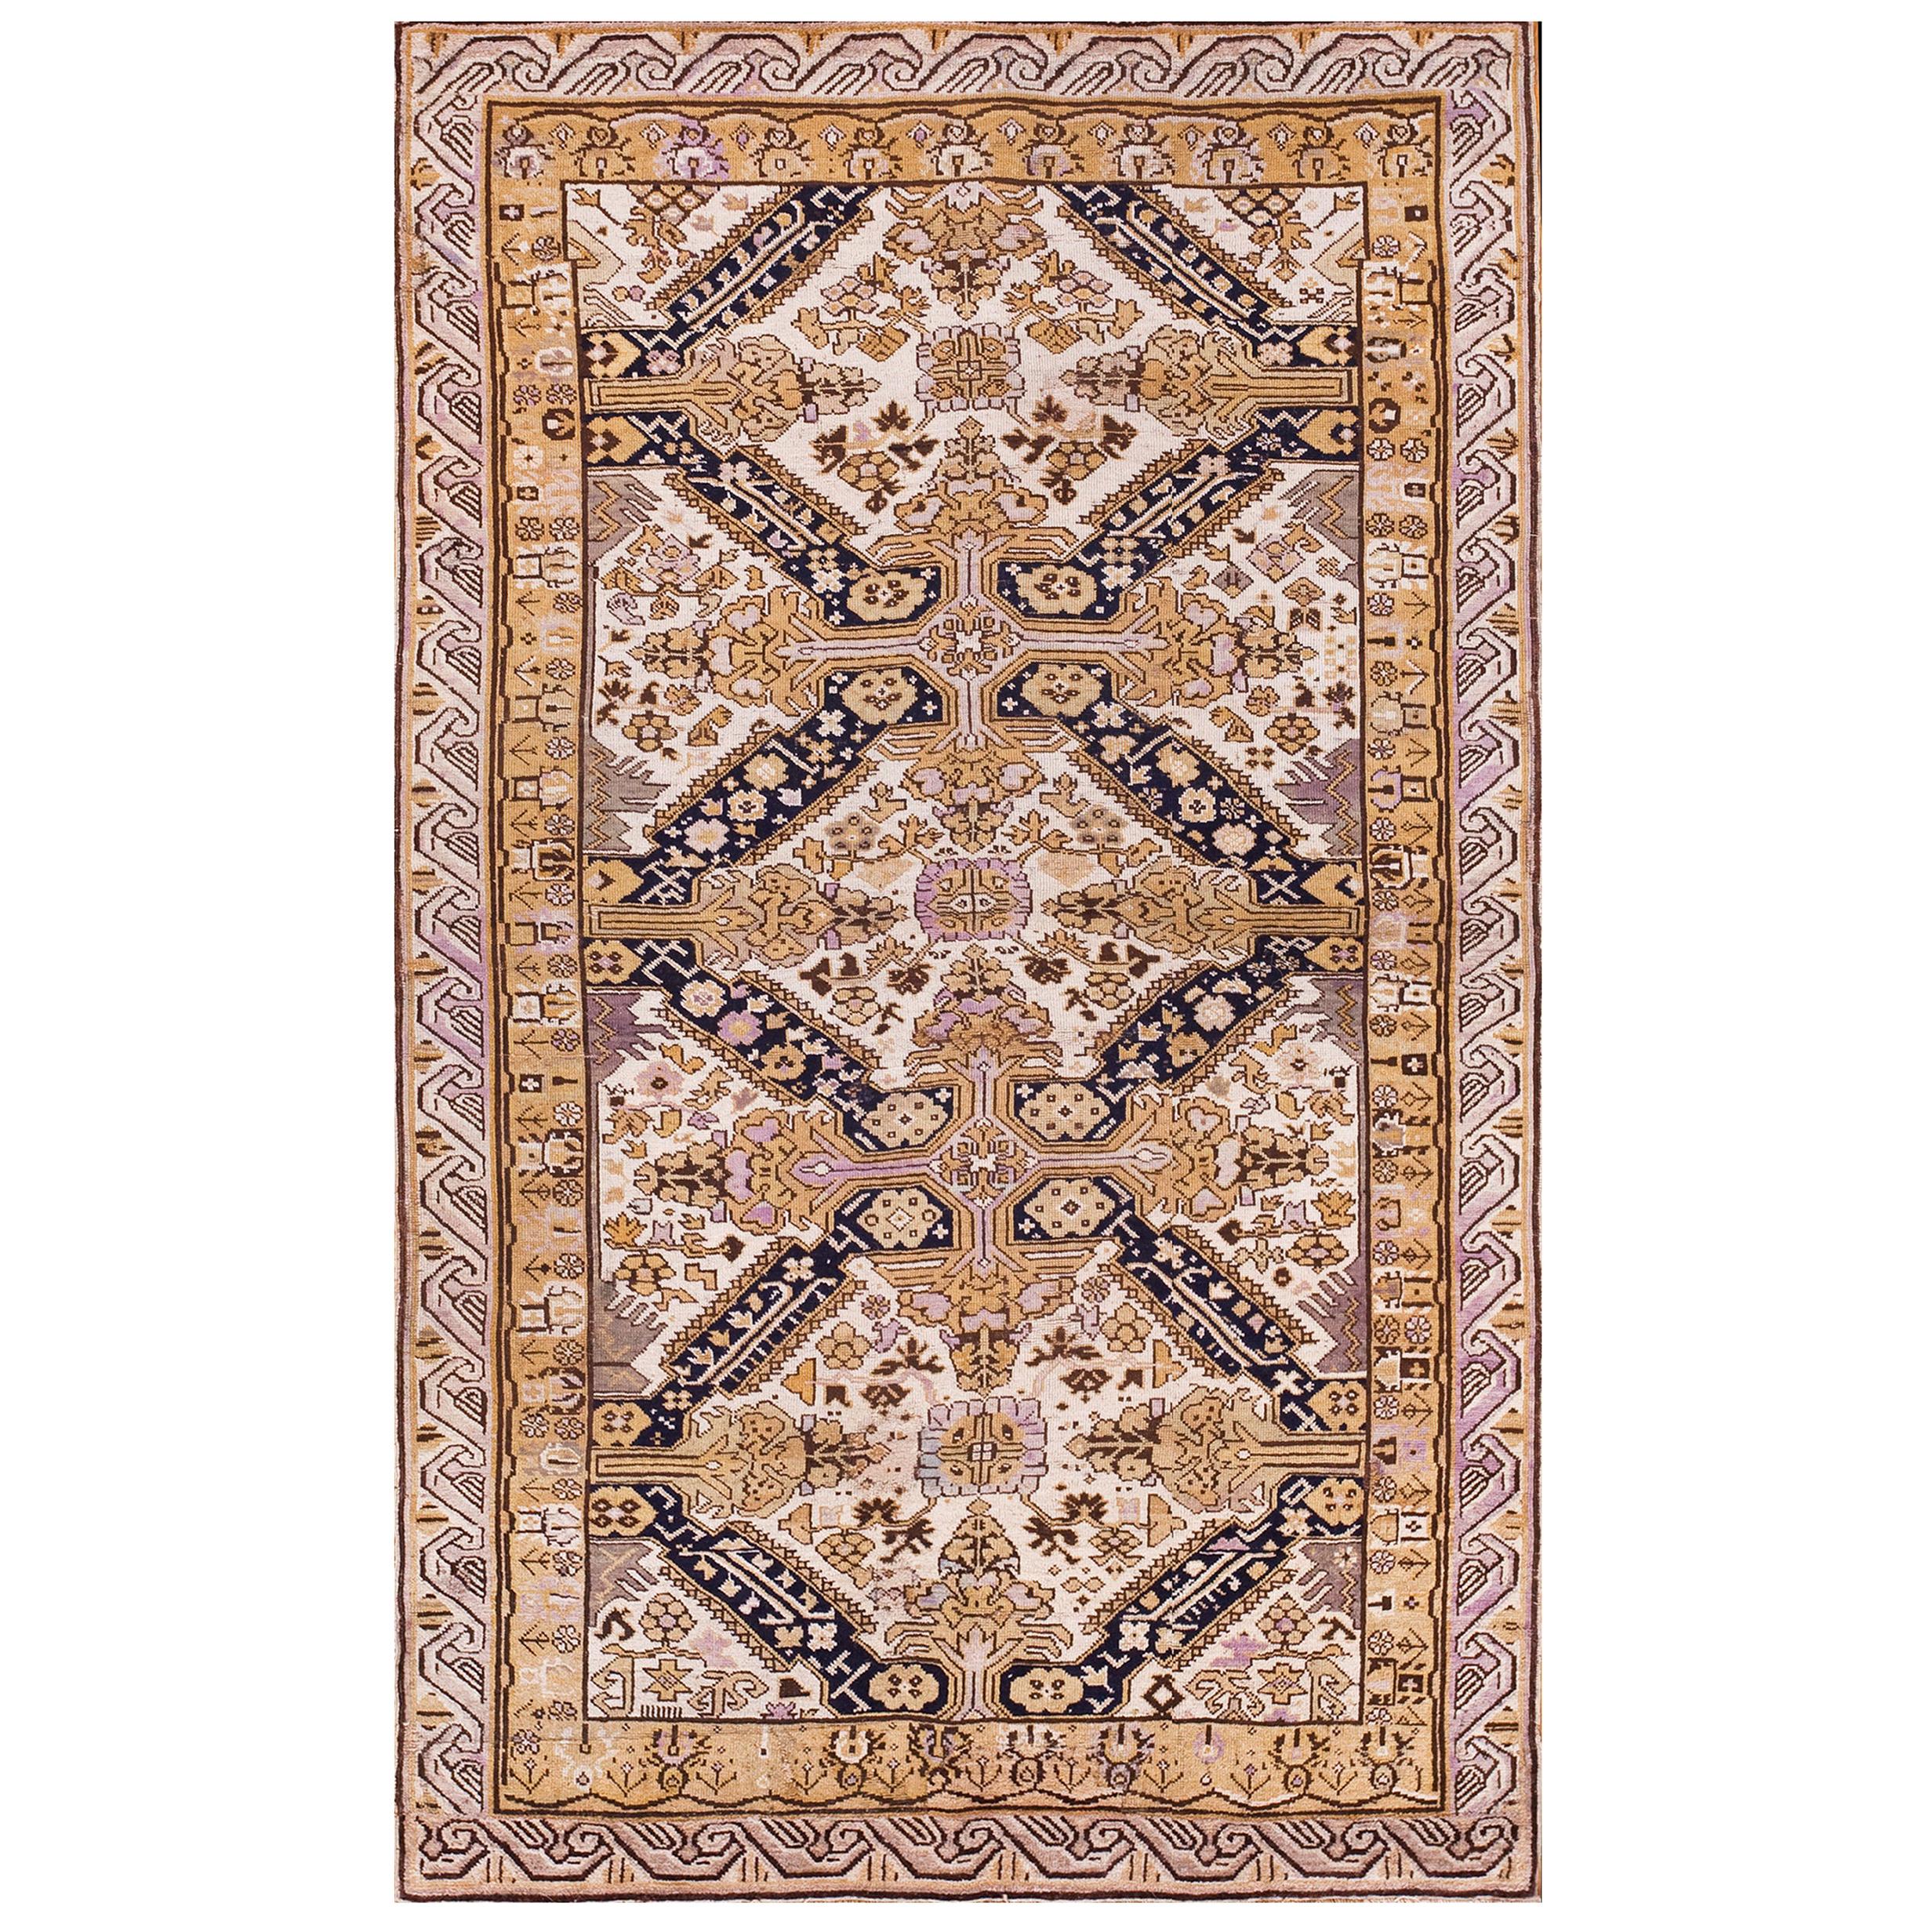 Early 20th Century Caucasian Zeychor Carpet ( 3'9" x 6'6" - 114 x 198 )